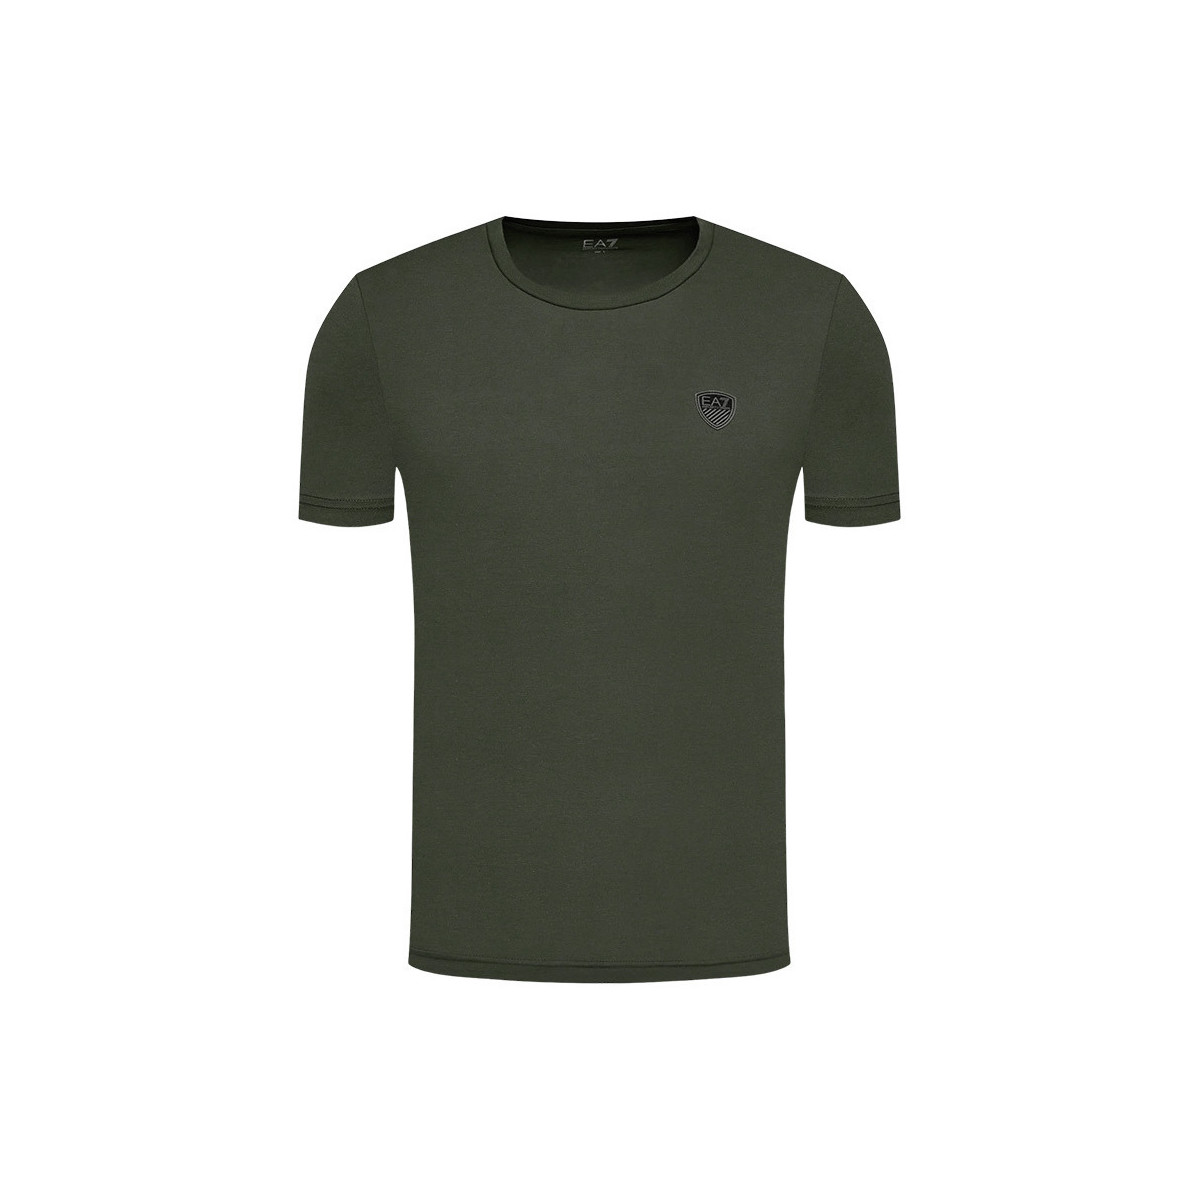 Kleidung Herren T-Shirts Ea7 Emporio Armani T-shirt Schwarz